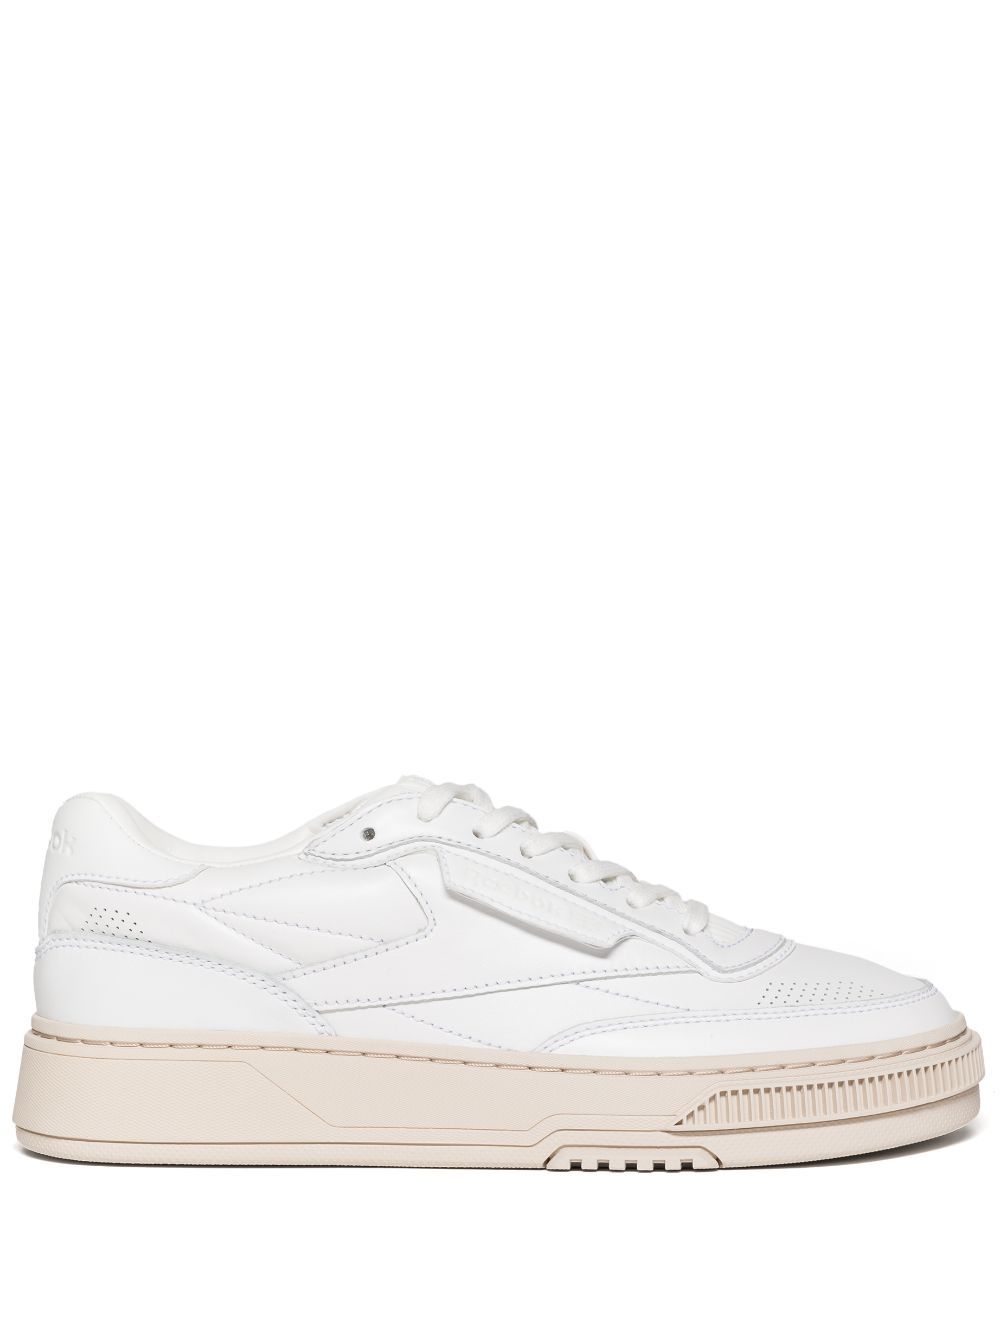 Reebok Ltd Club C Ltd "white" Leather Sneakers